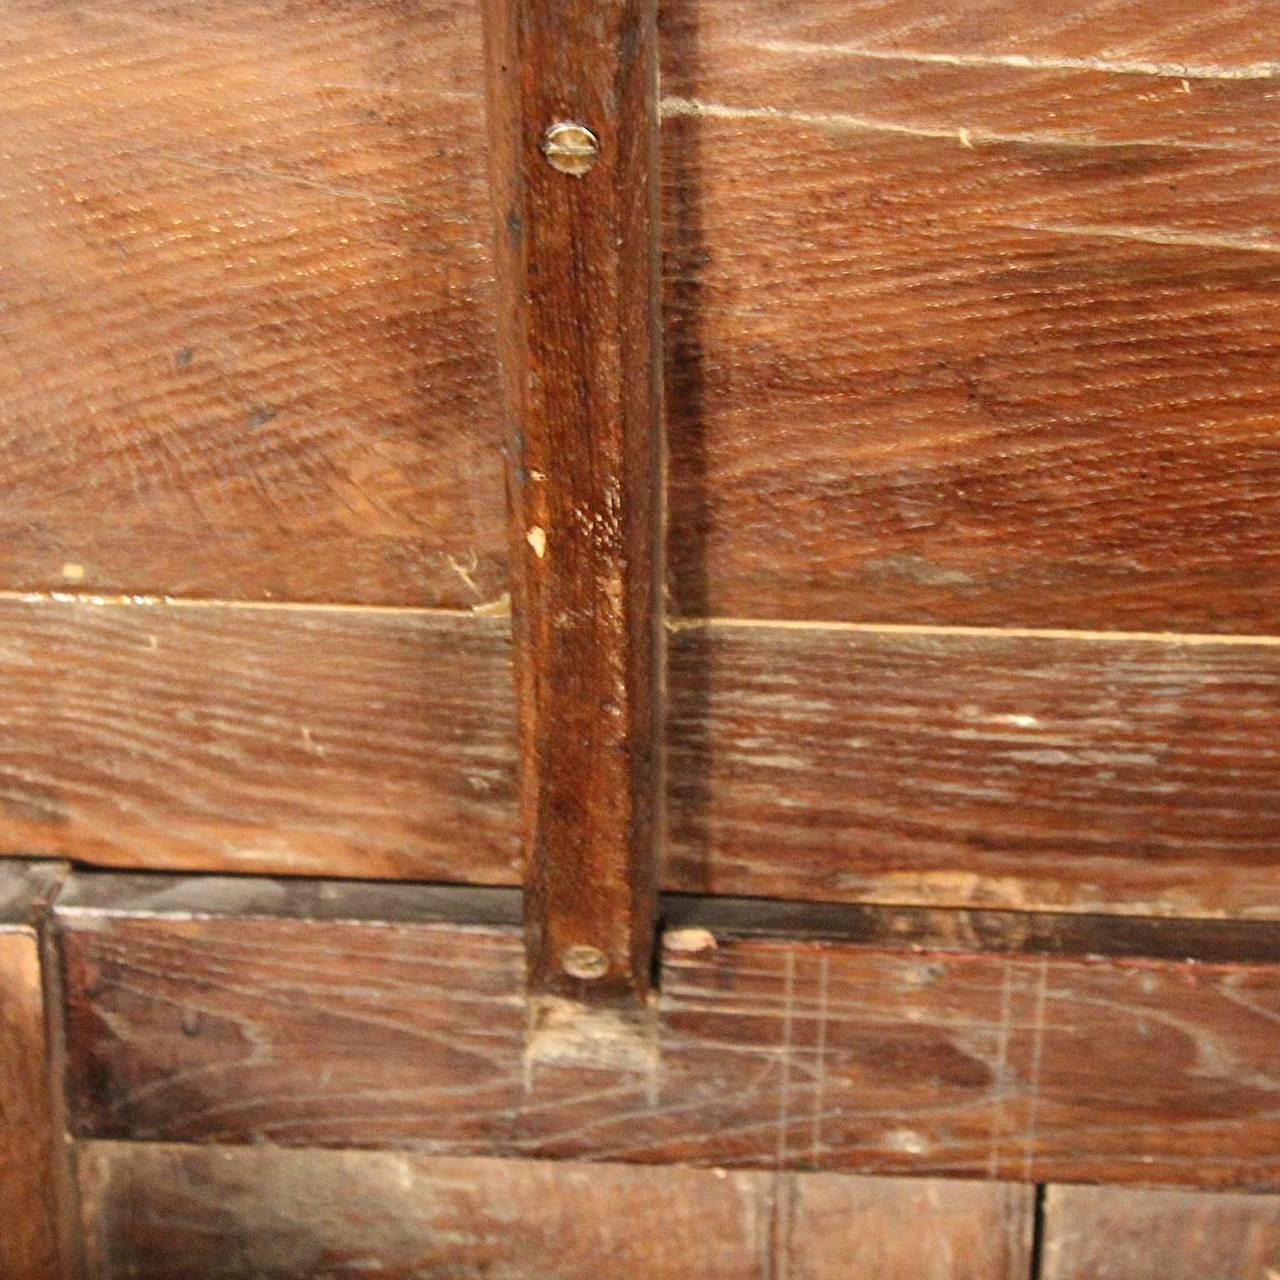 Late 18th century walnut coffer. Raised panel front. Wonderful aged patina.